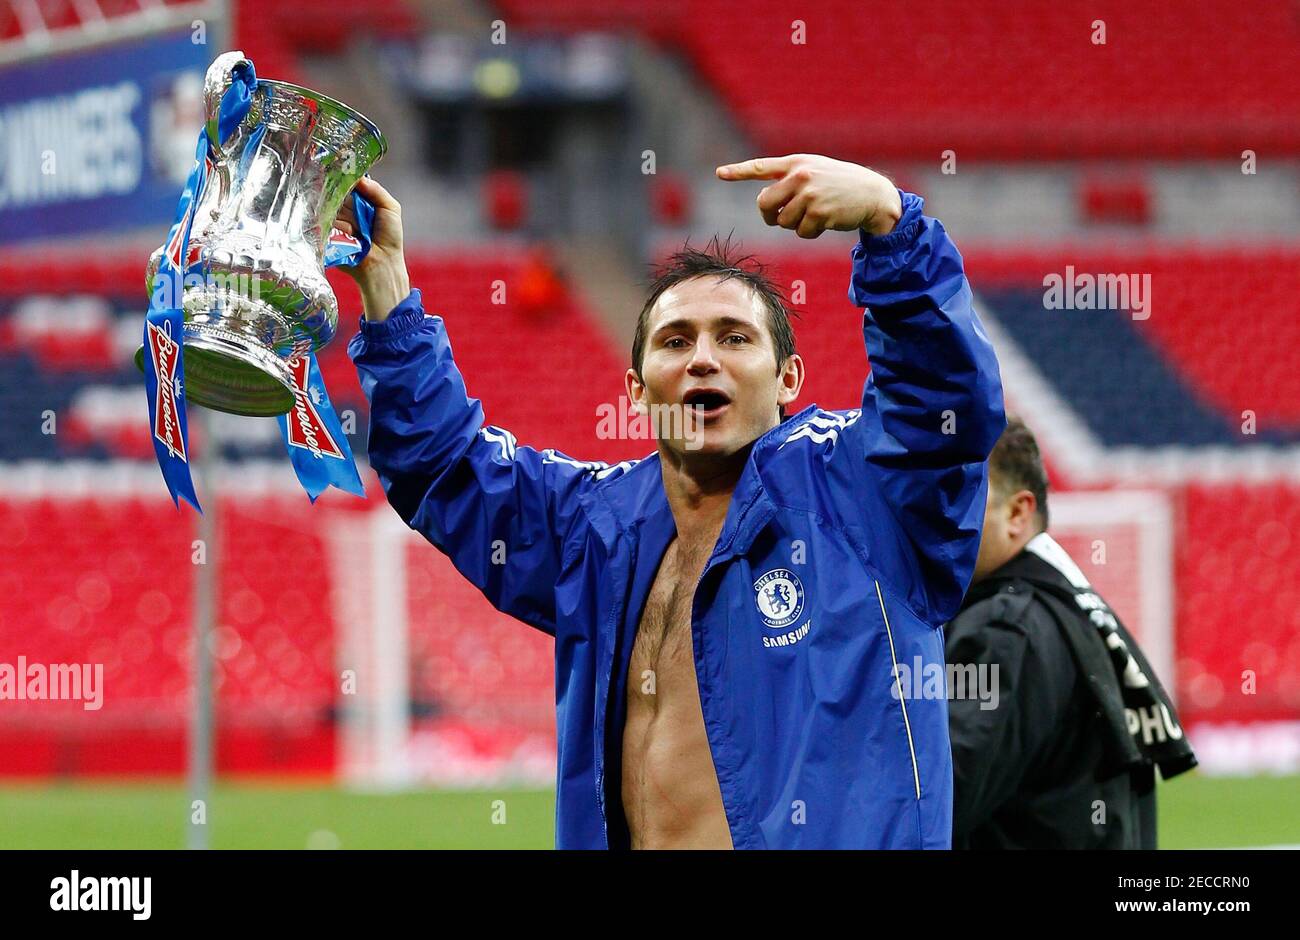 Football - Chelsea v Liverpool FA Cup Final - Wembley Stadium - 5/5/12  Chelsea's Frank Lampard celebrates